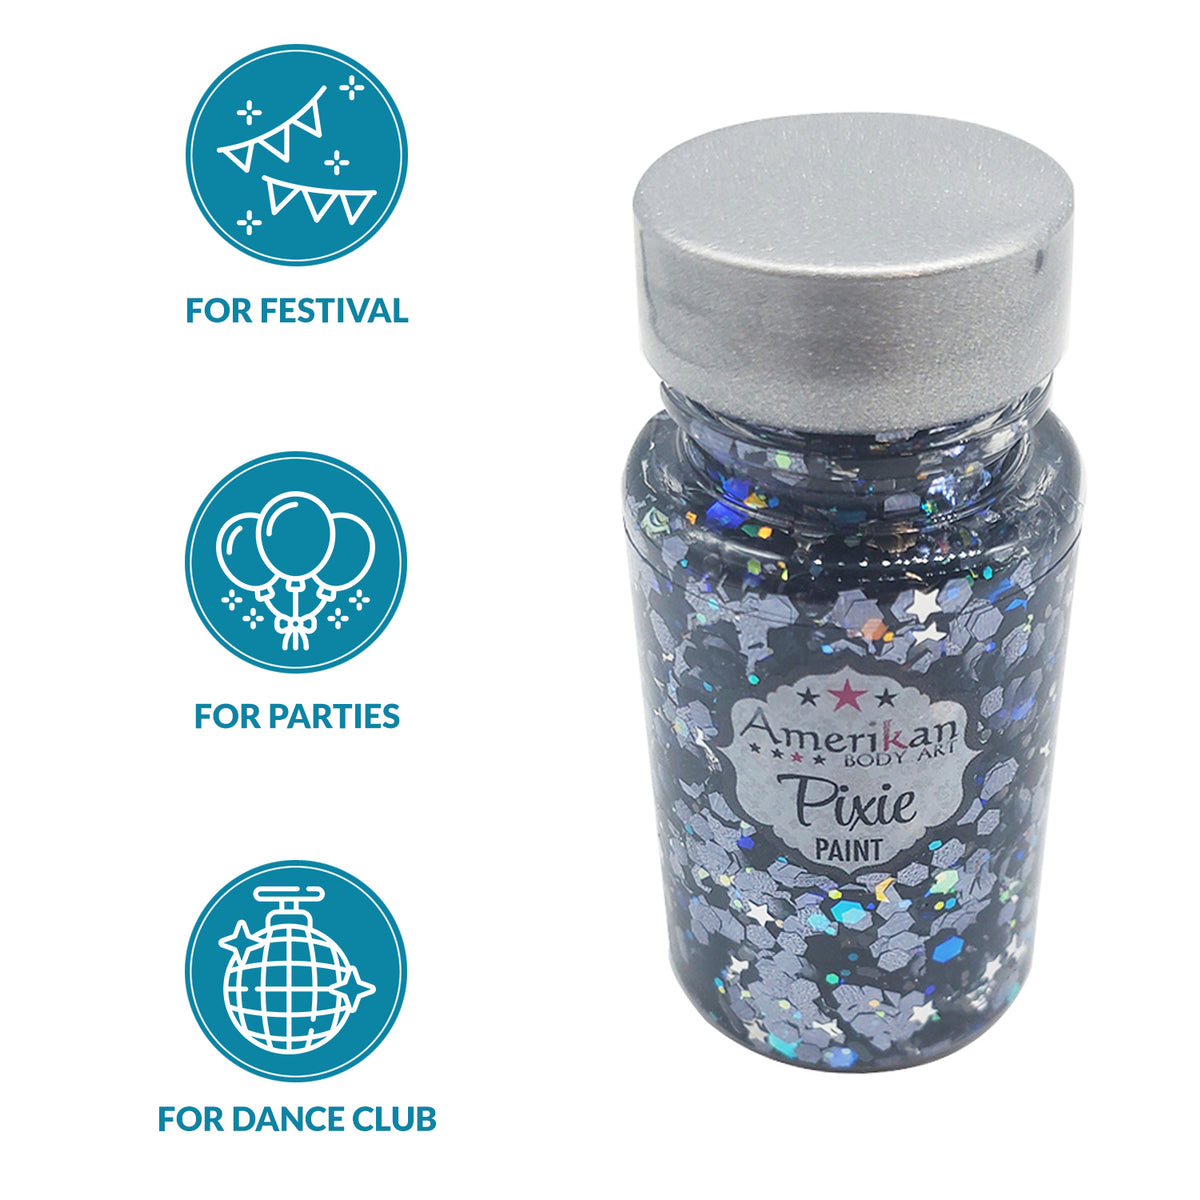 Pixie Paint Glitter Gel - Rockstar - Limited Edition Party Size 1.3 oz